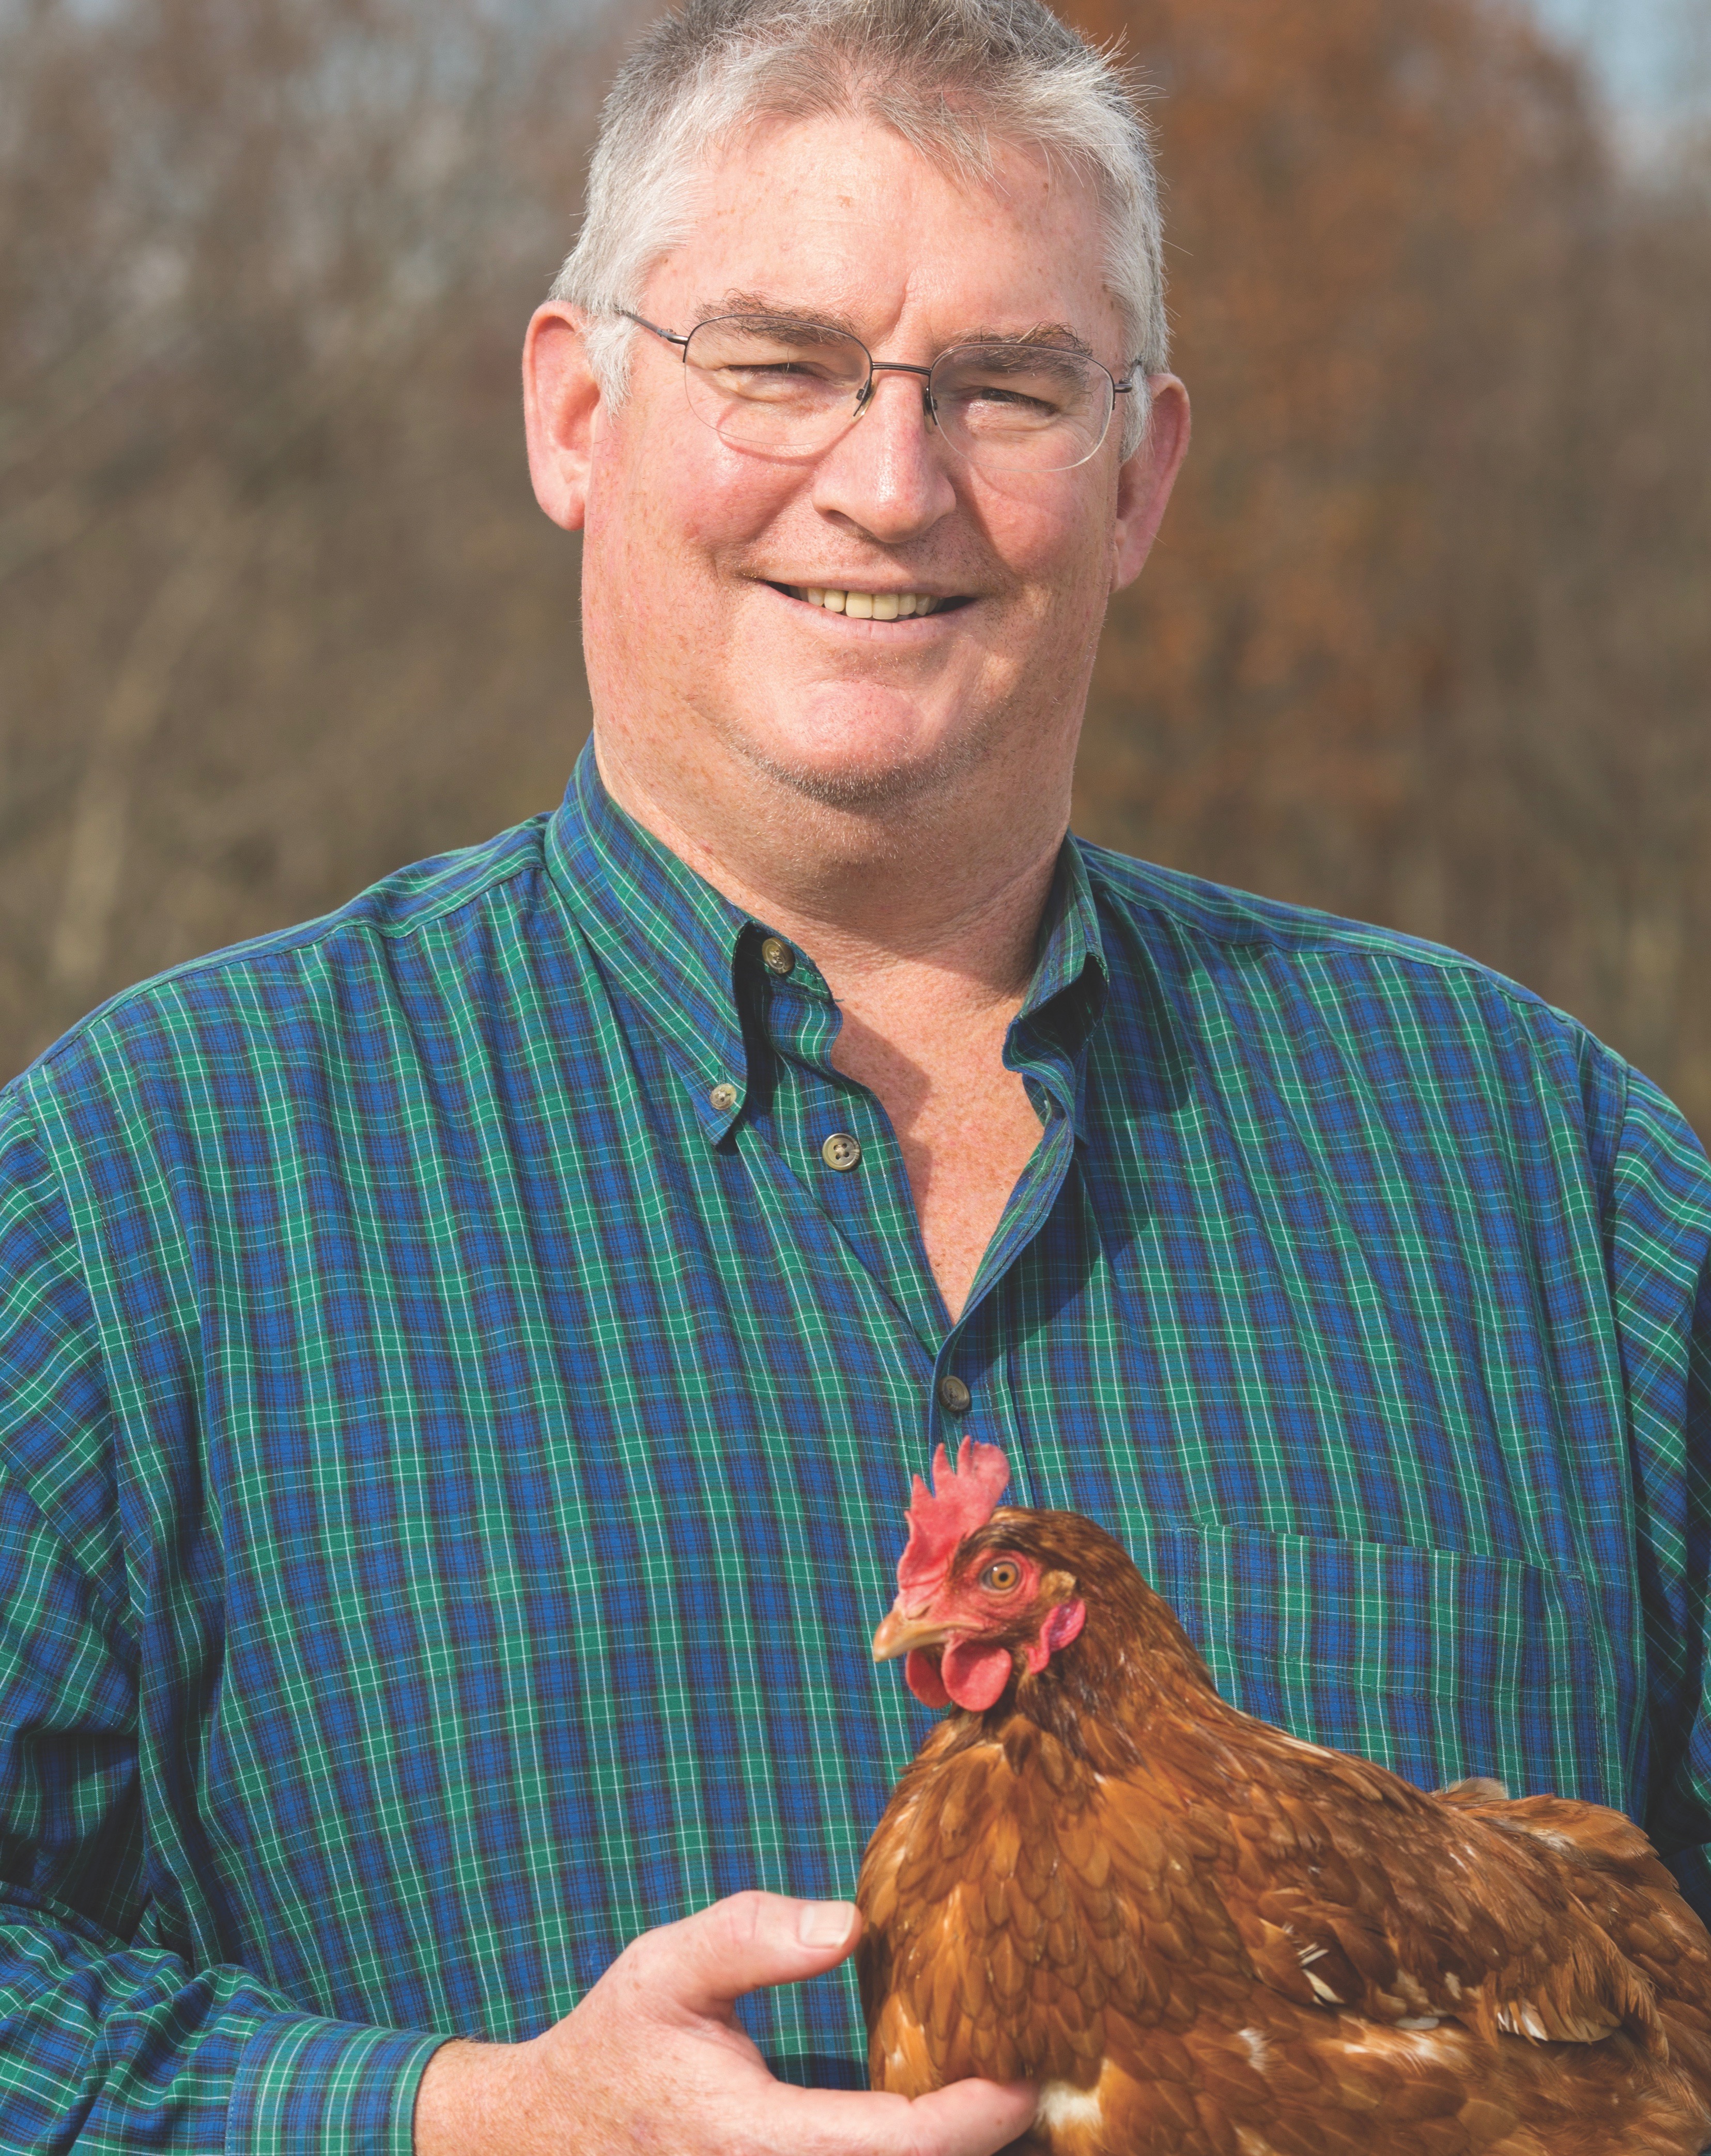 a man holds a chicken